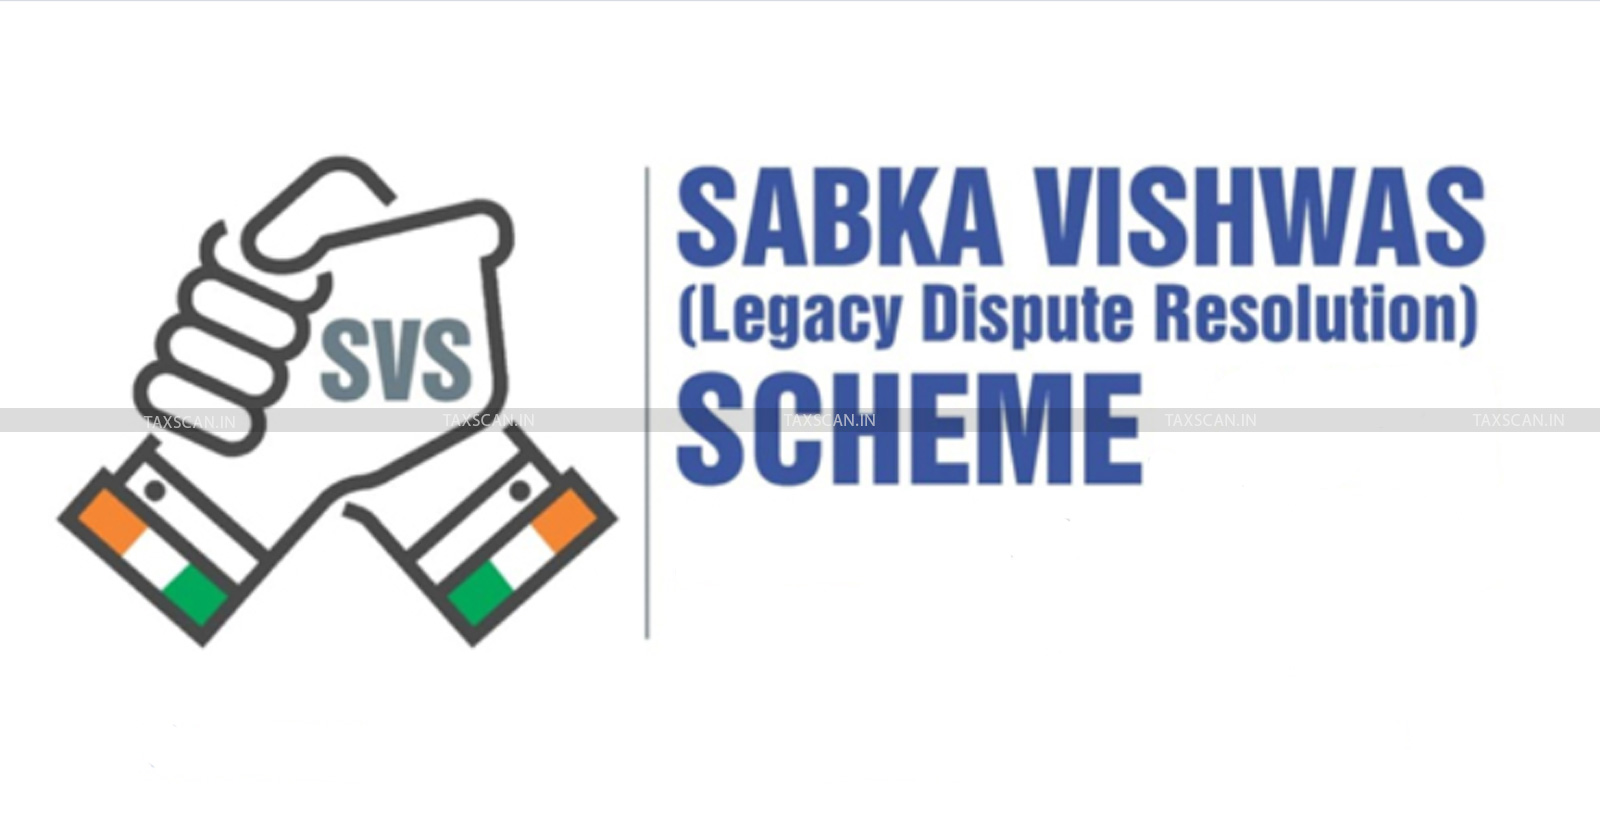 Invocation of Writ Jurisdiction Extend Limitation - Payment - Comply Provisions of Subka Vishwas (LDR) Scheme - Kerala HC - TAXSCAN